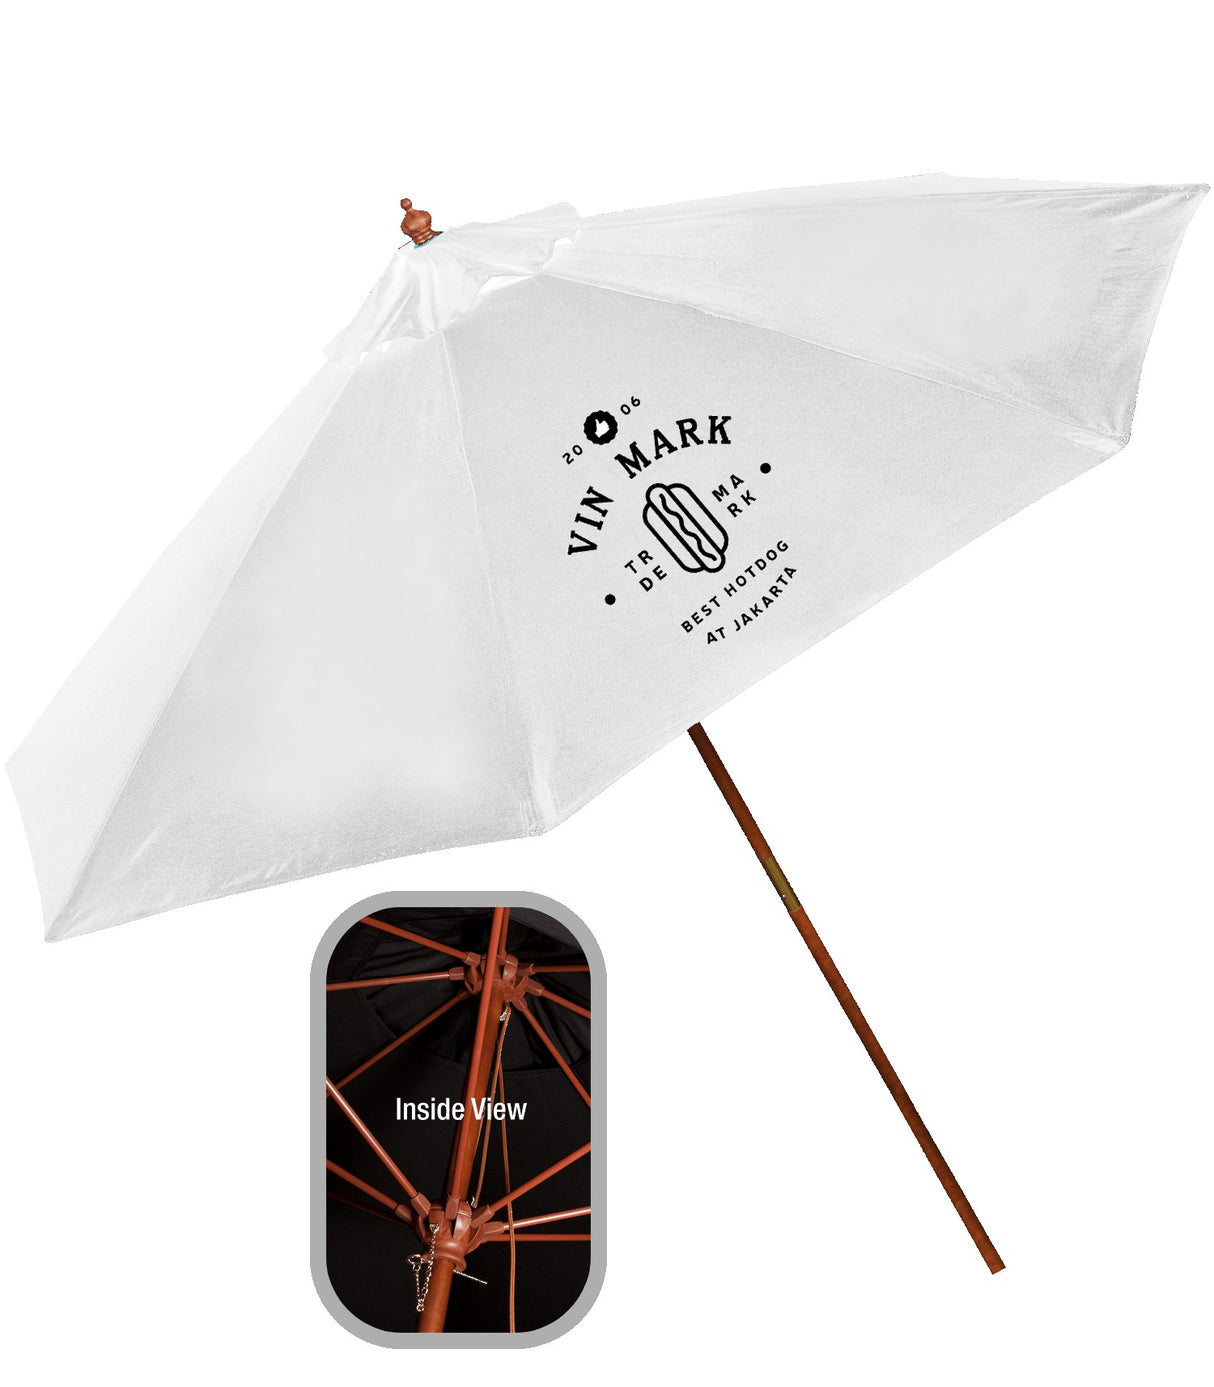 9' Wooden Polyester Market Umbrella